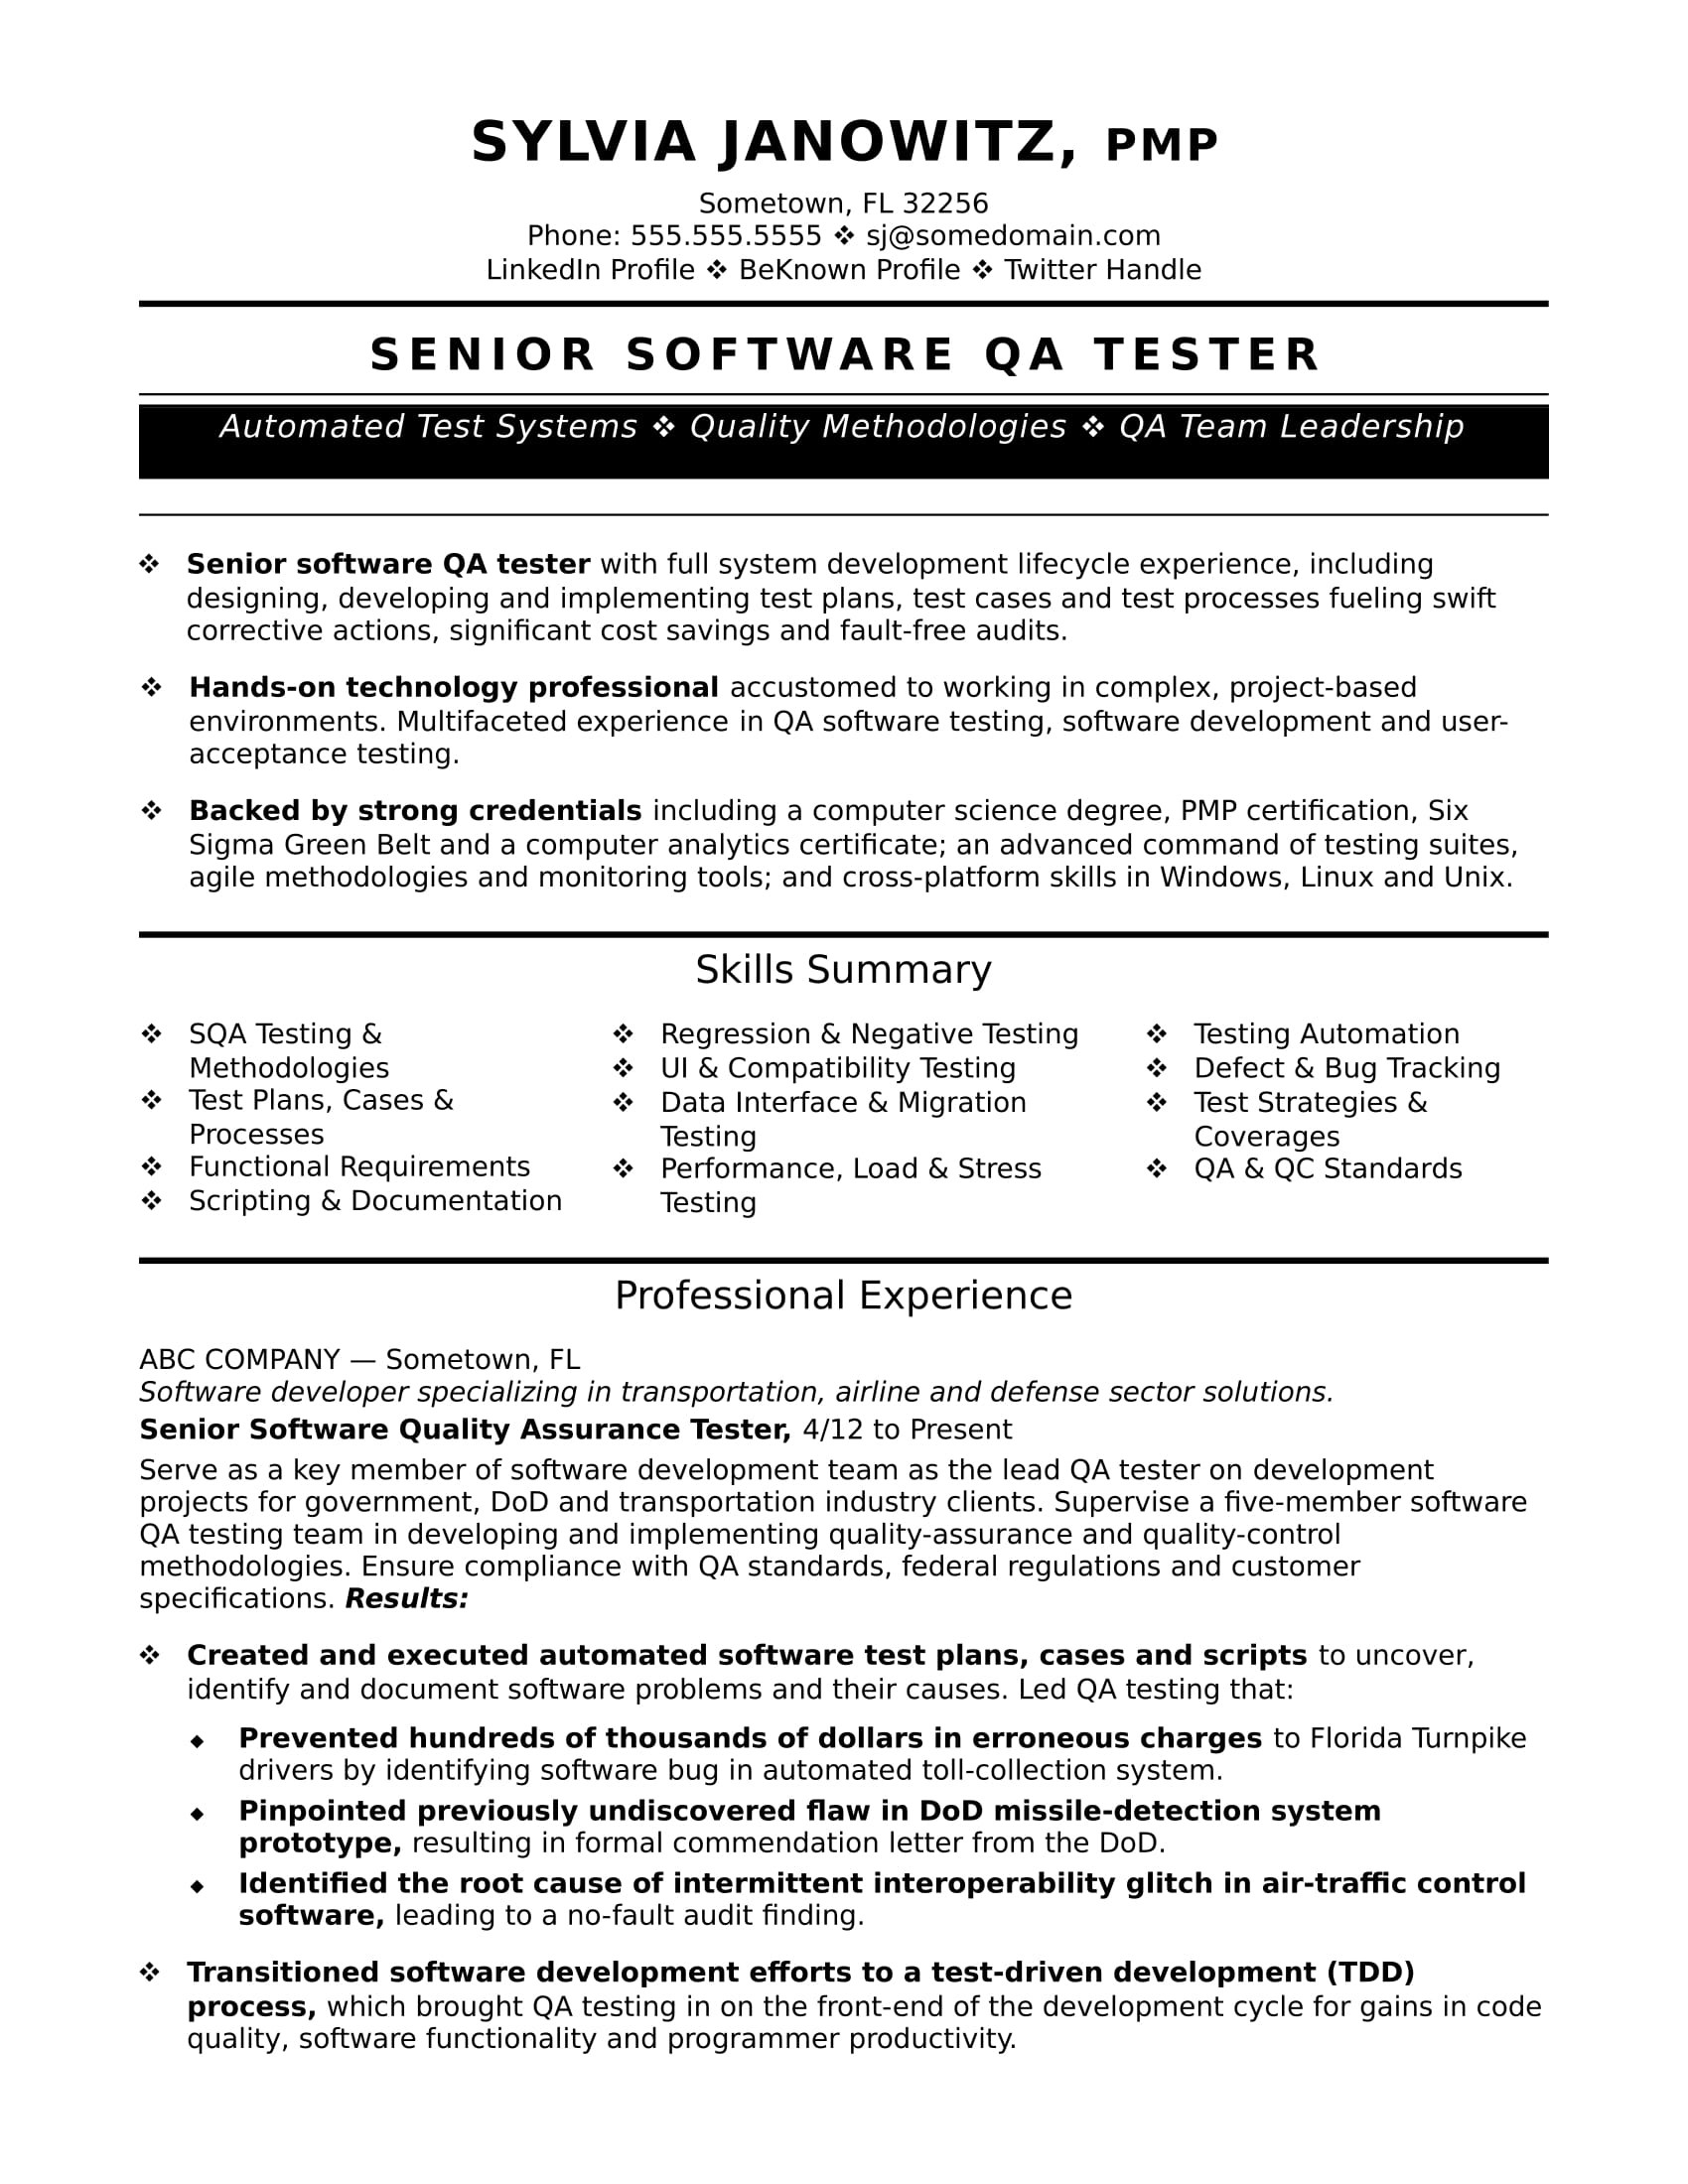 Software Qa Resume Samples with No Work Experience Experienced Qa software Tester Resume Sample Monster.com